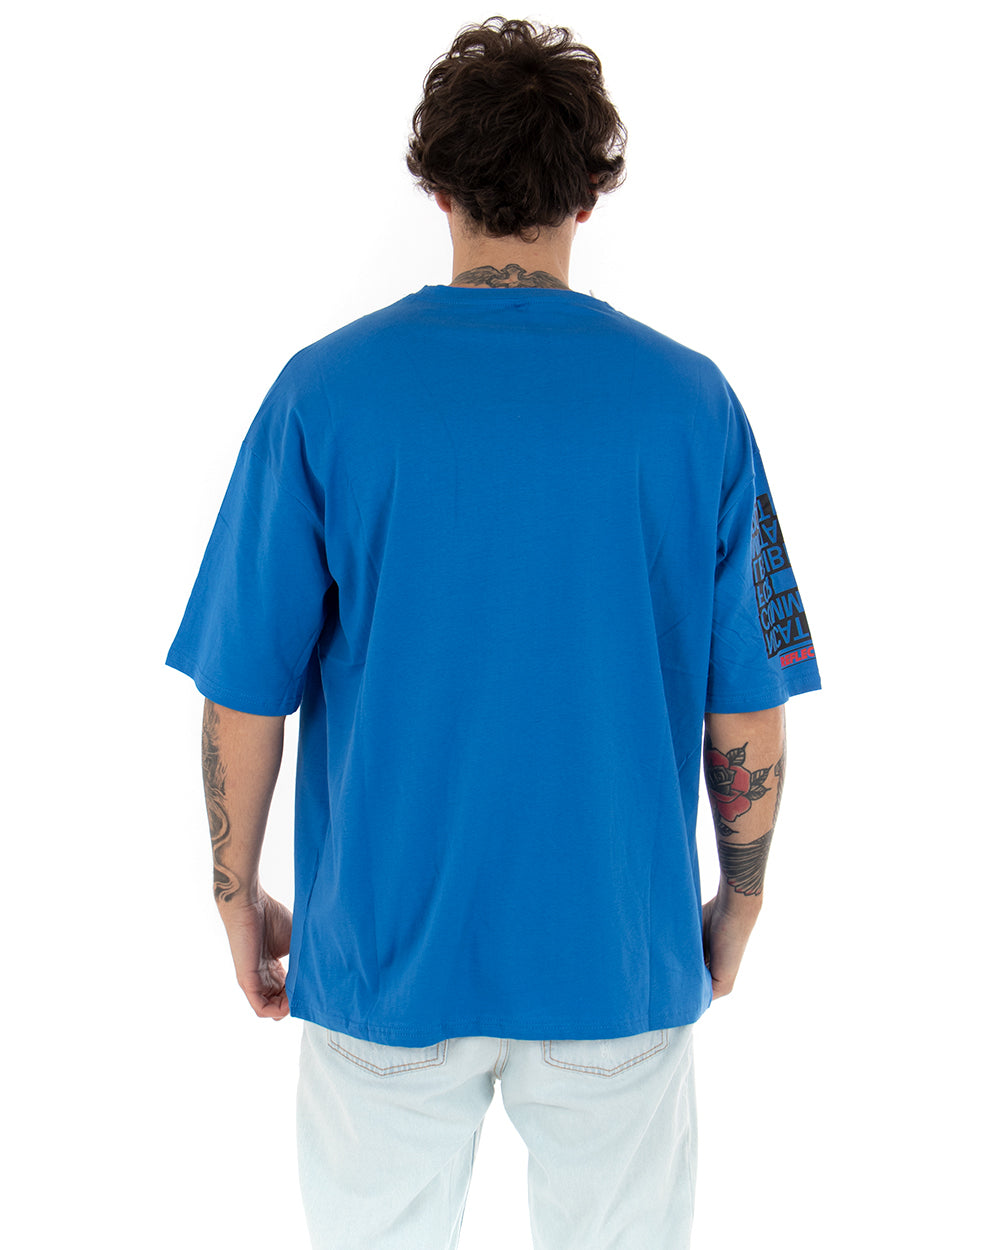 T-shirt Uomo Tinta Unita Blu Royal Stampe Girocollo Oversize GIOSAL